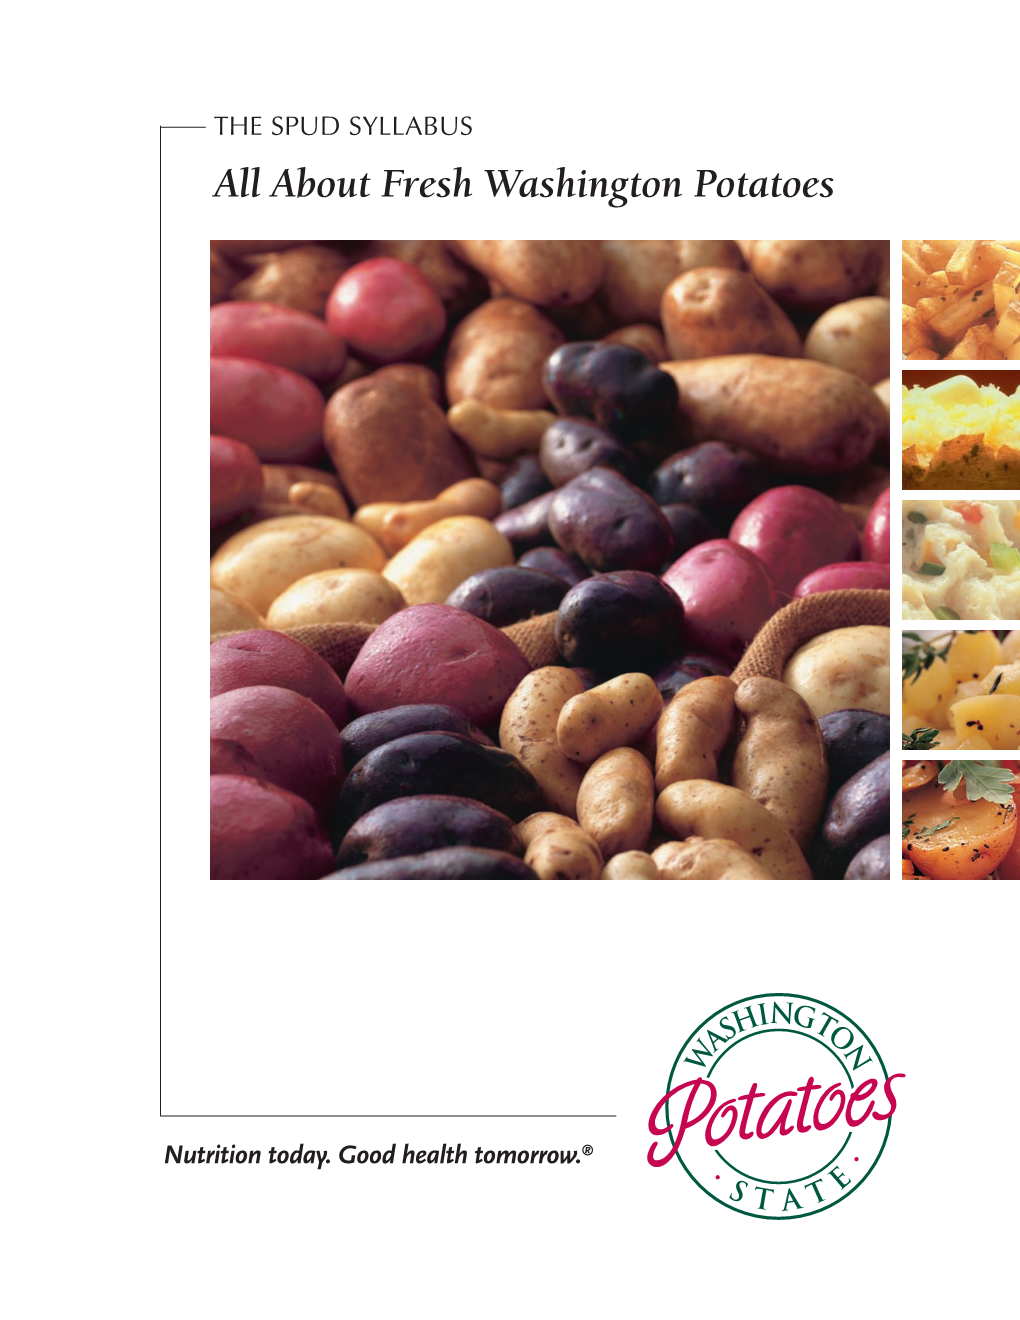 About Fresh Washington Potatoes